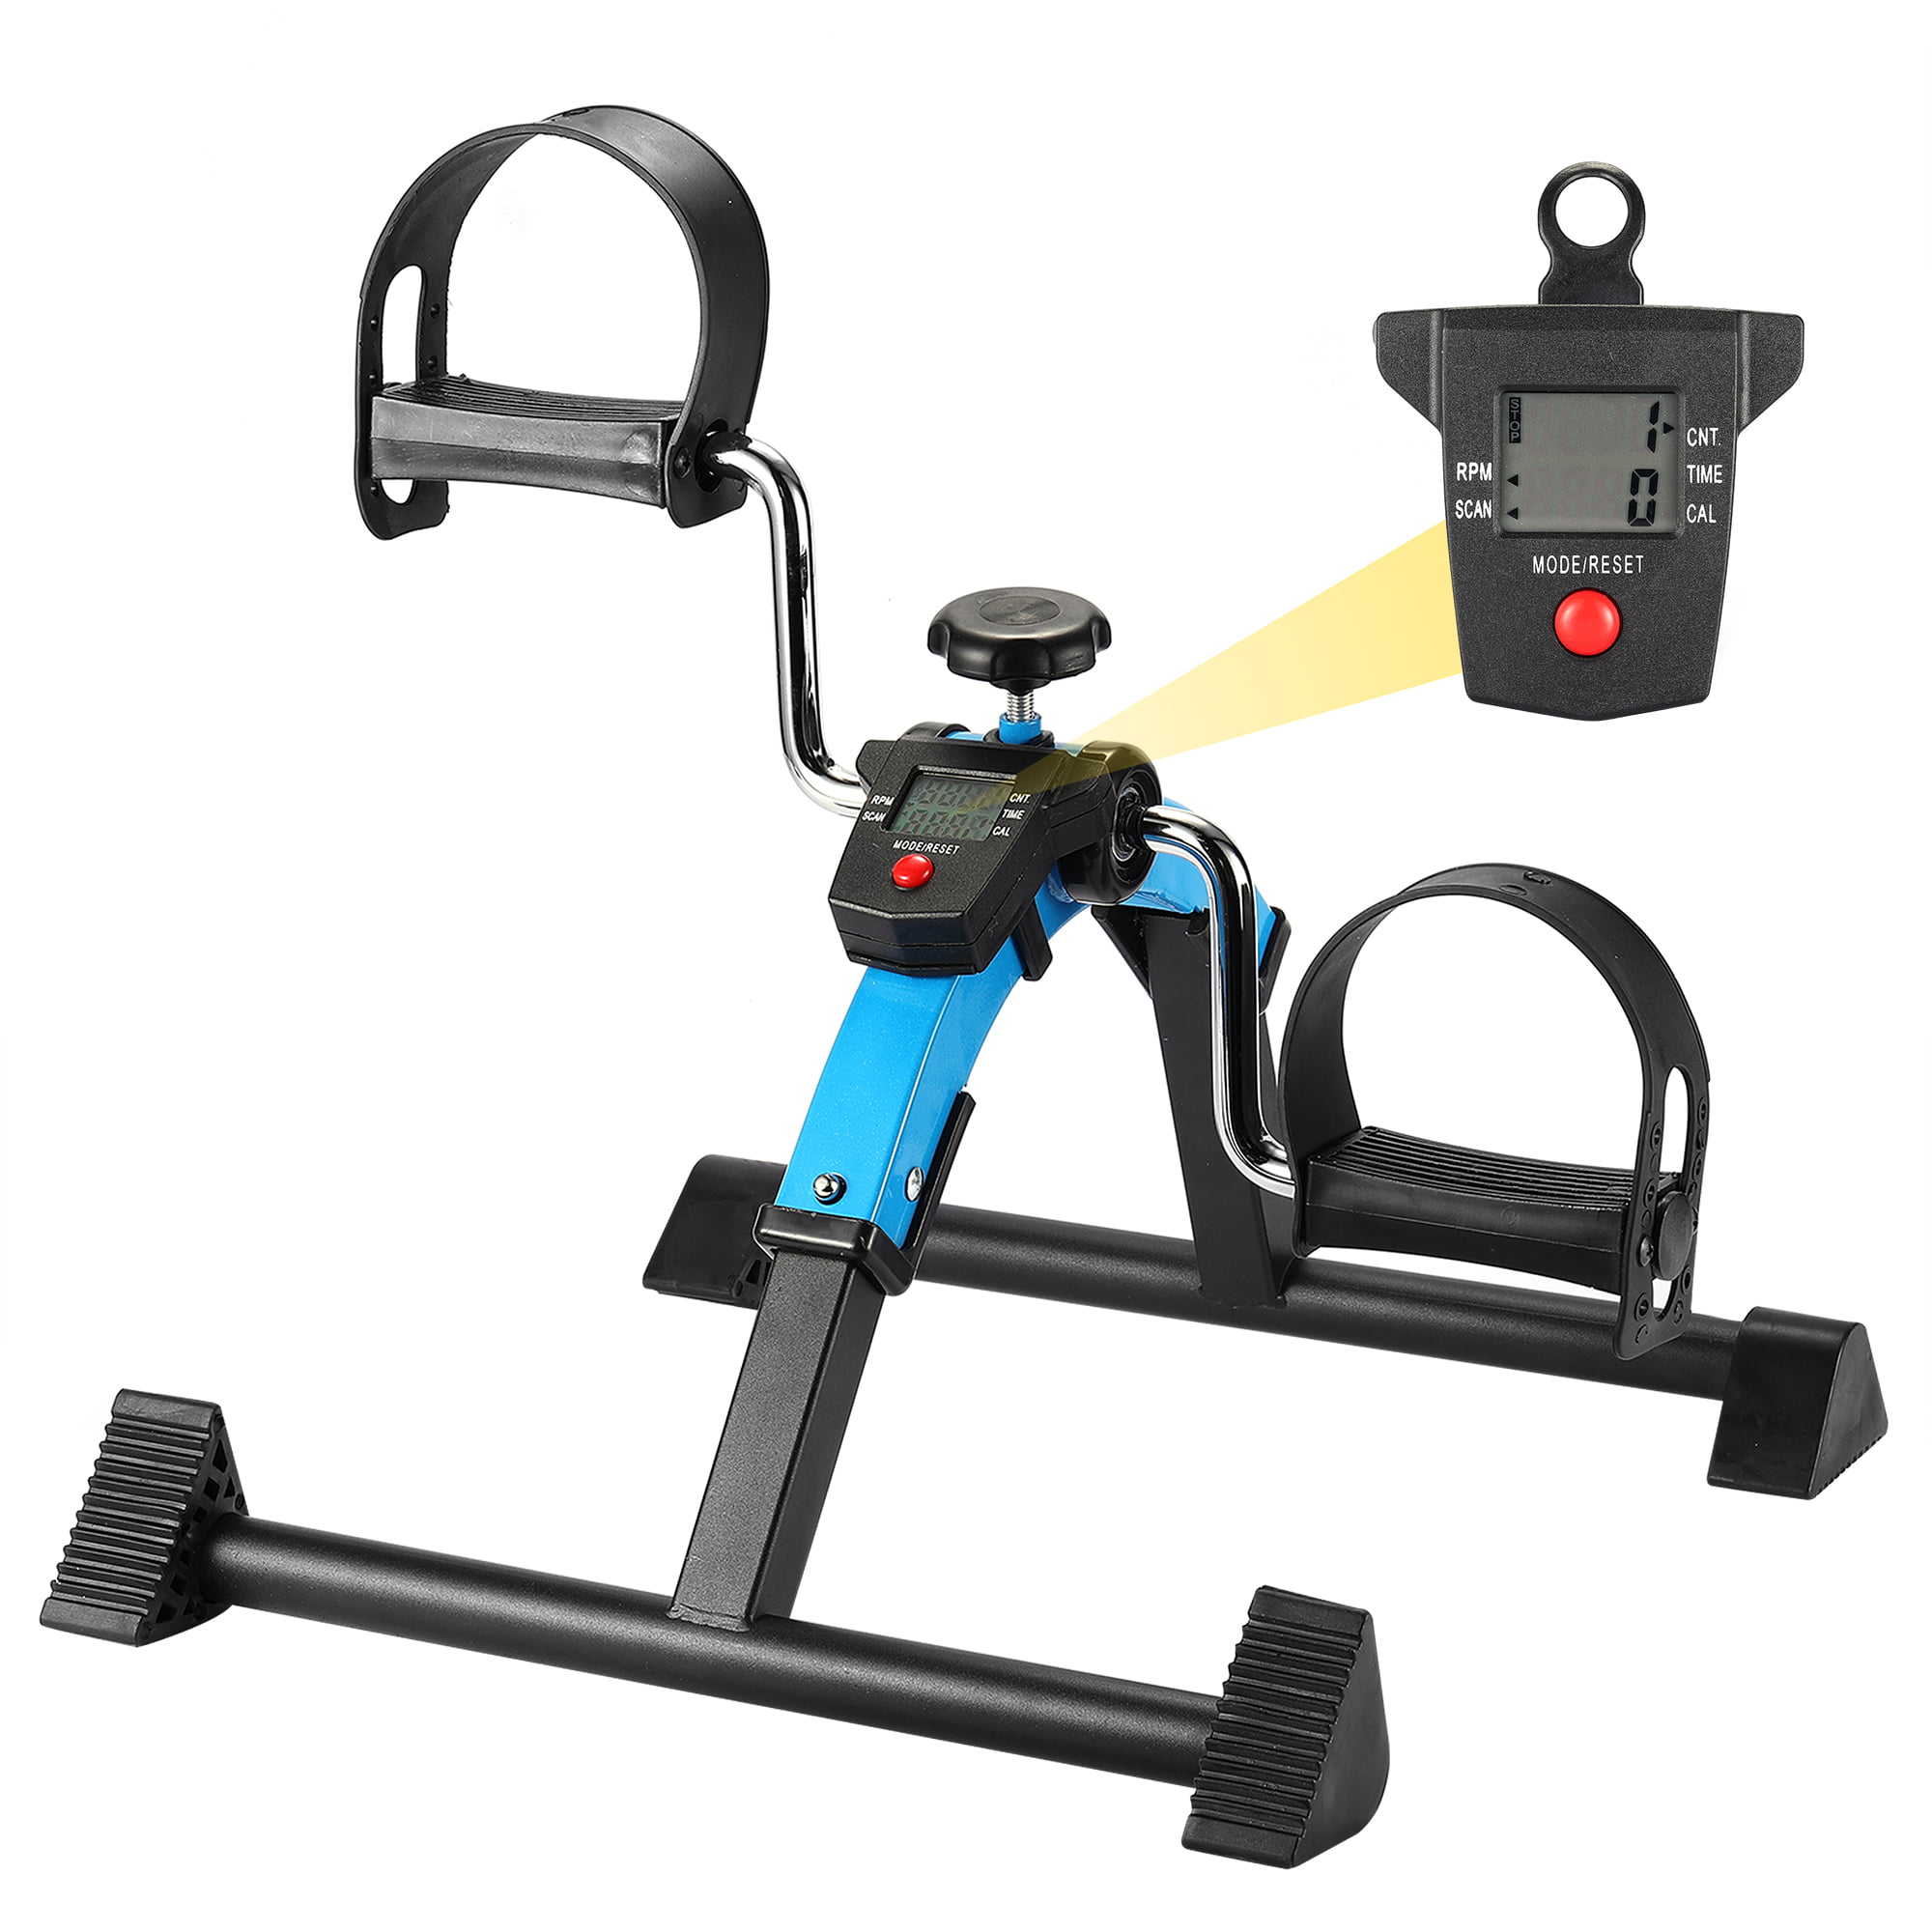 Folding LCD Exercise Bike Pedal Exerciser Leg Arm Training Adjustable Resistance 